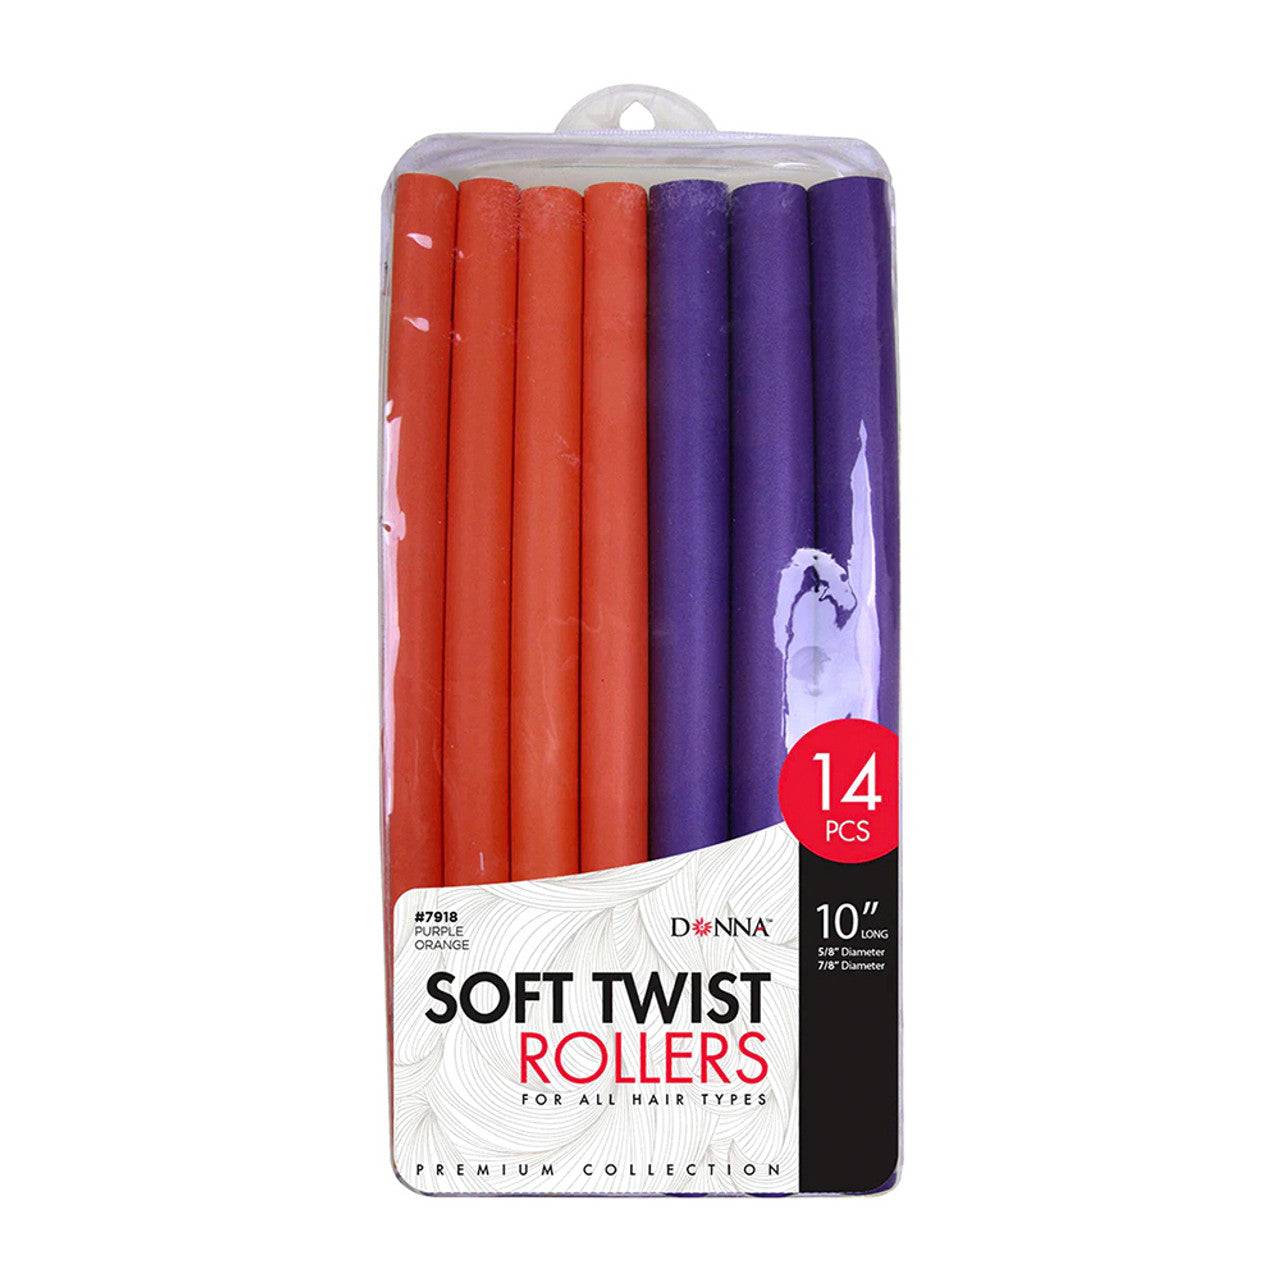 Donna Soft Twist Roller, 10 Inch Long 7918 Purple and Orange, 14pc